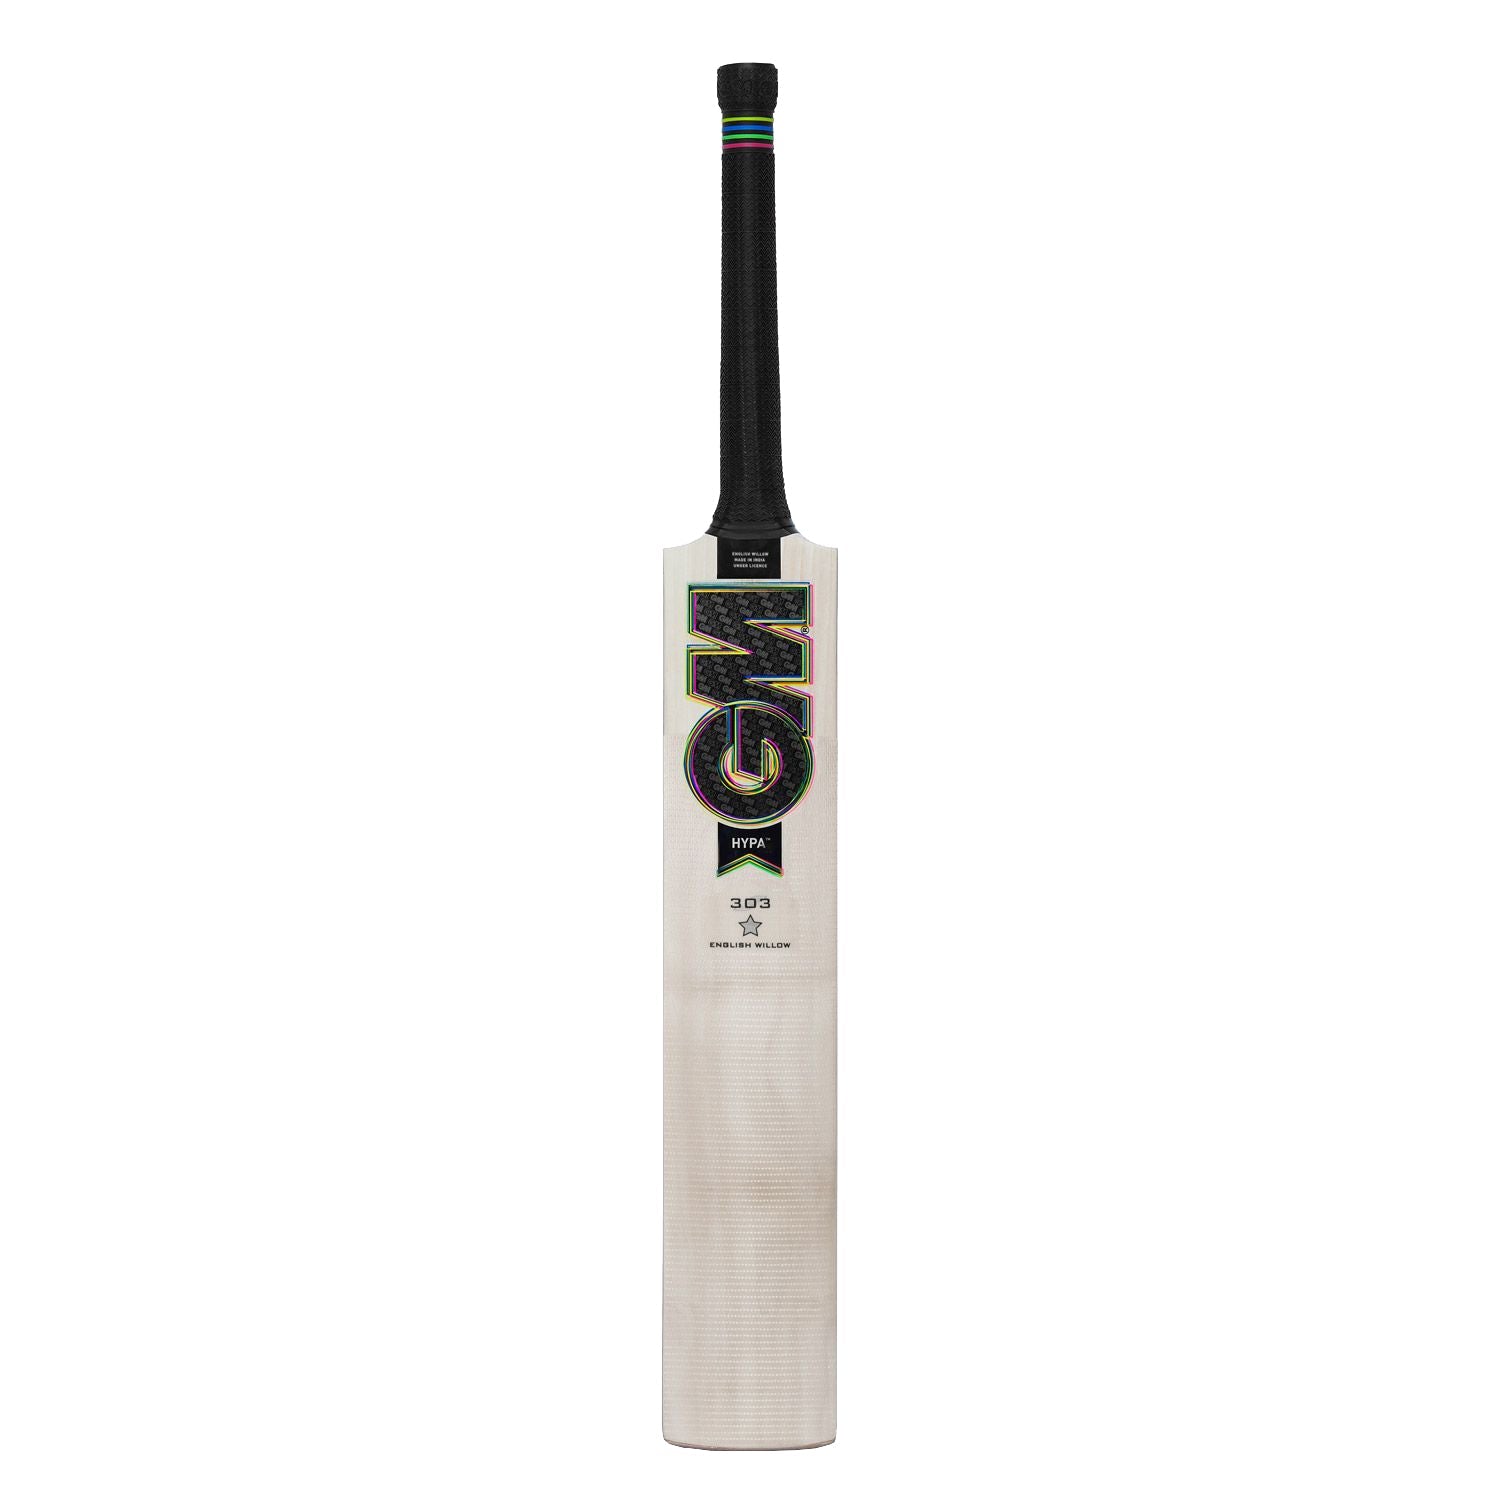 Gunn & Moore GM Hypa 303 Cricket Bat - Senior